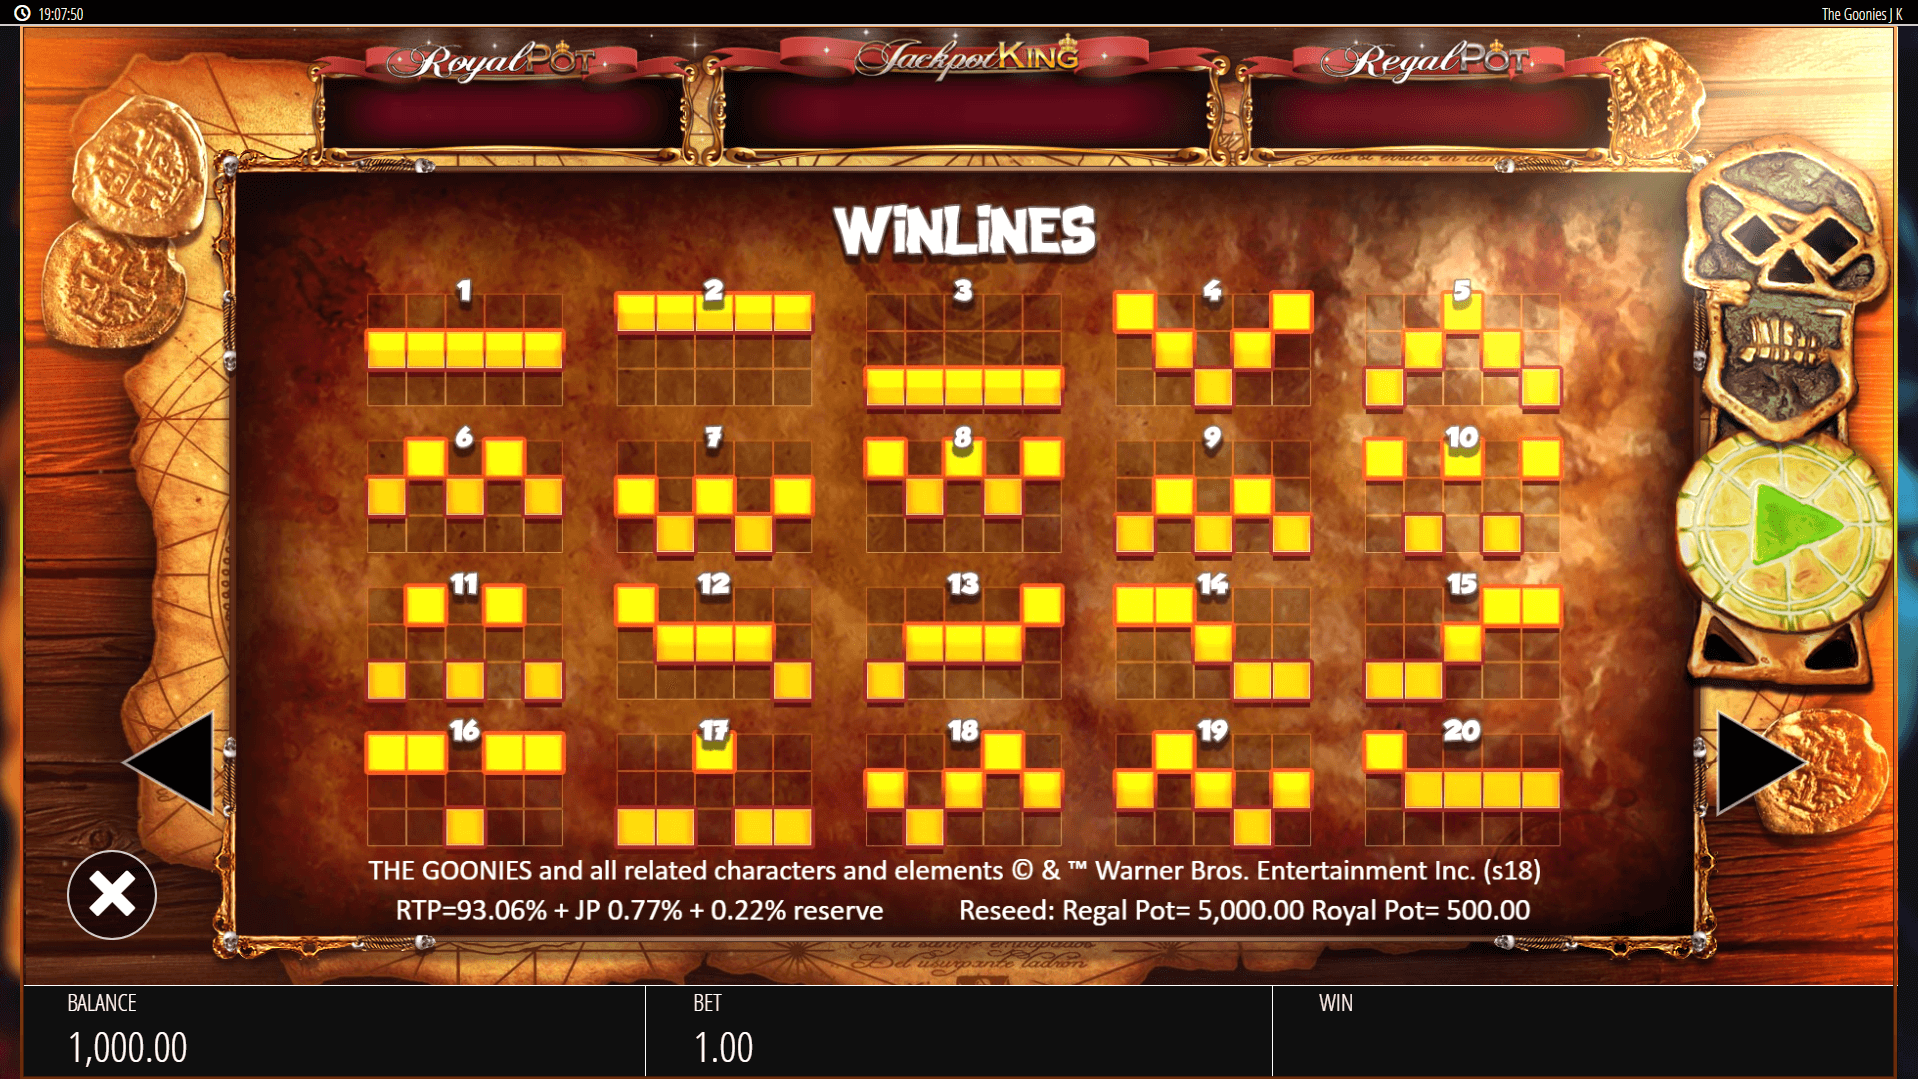 the goonies jackpot king slot machine detail image 4